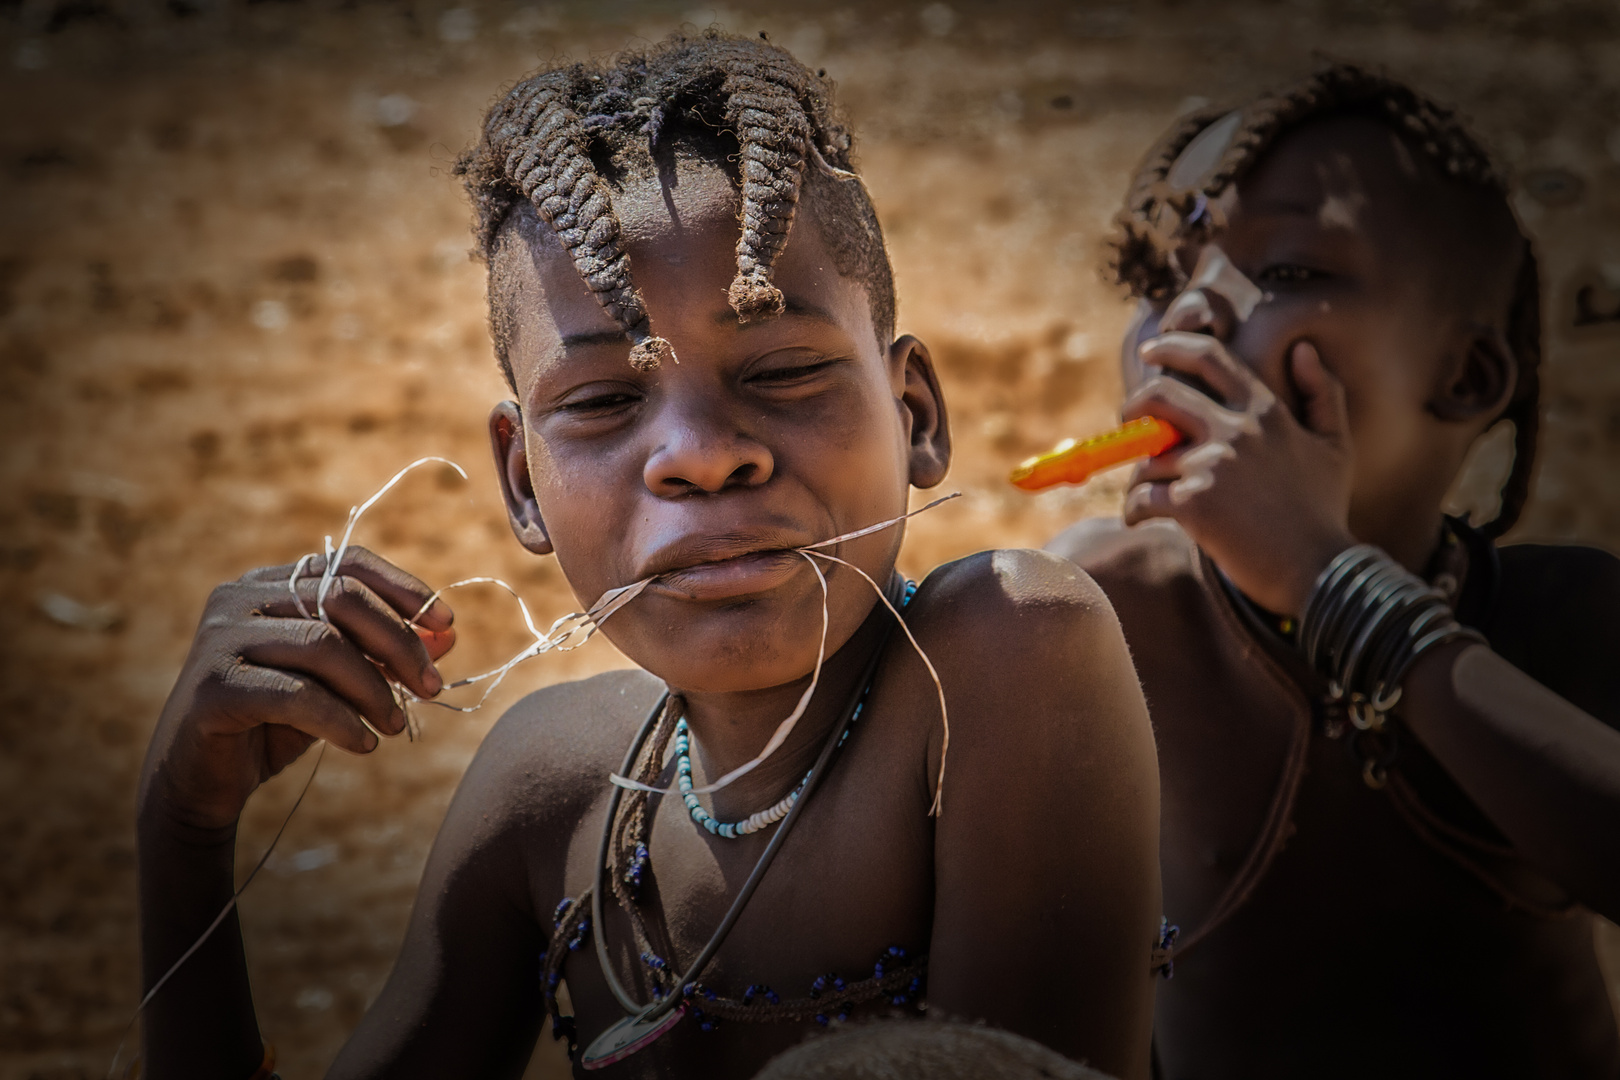 Portraits eines Himba-Mädchens